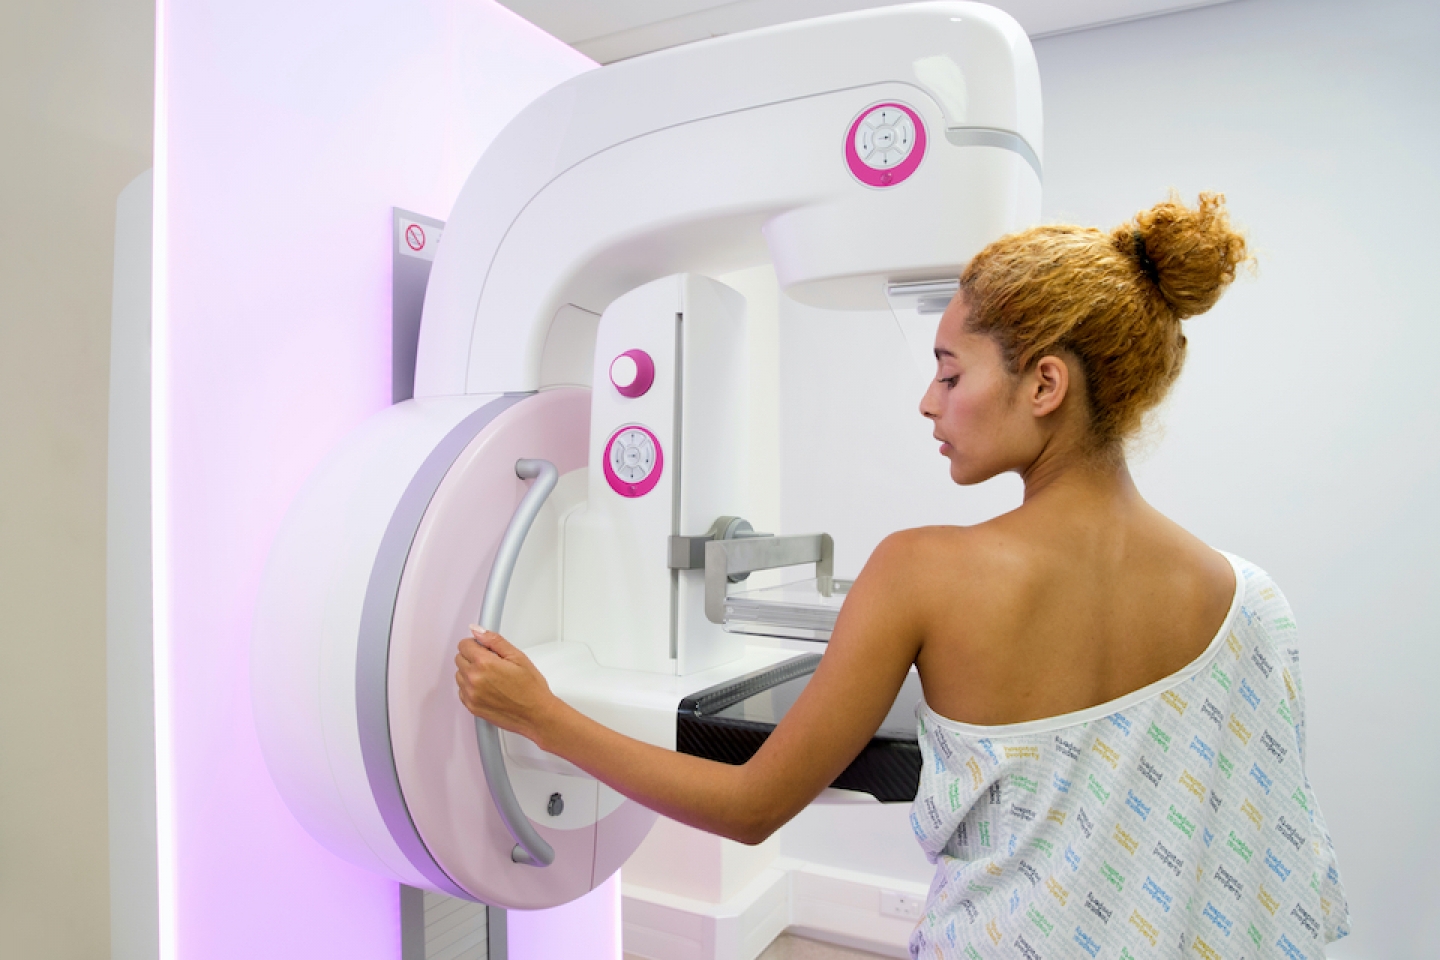 Female Patient Having Mammogram In Hospital Radiology Department